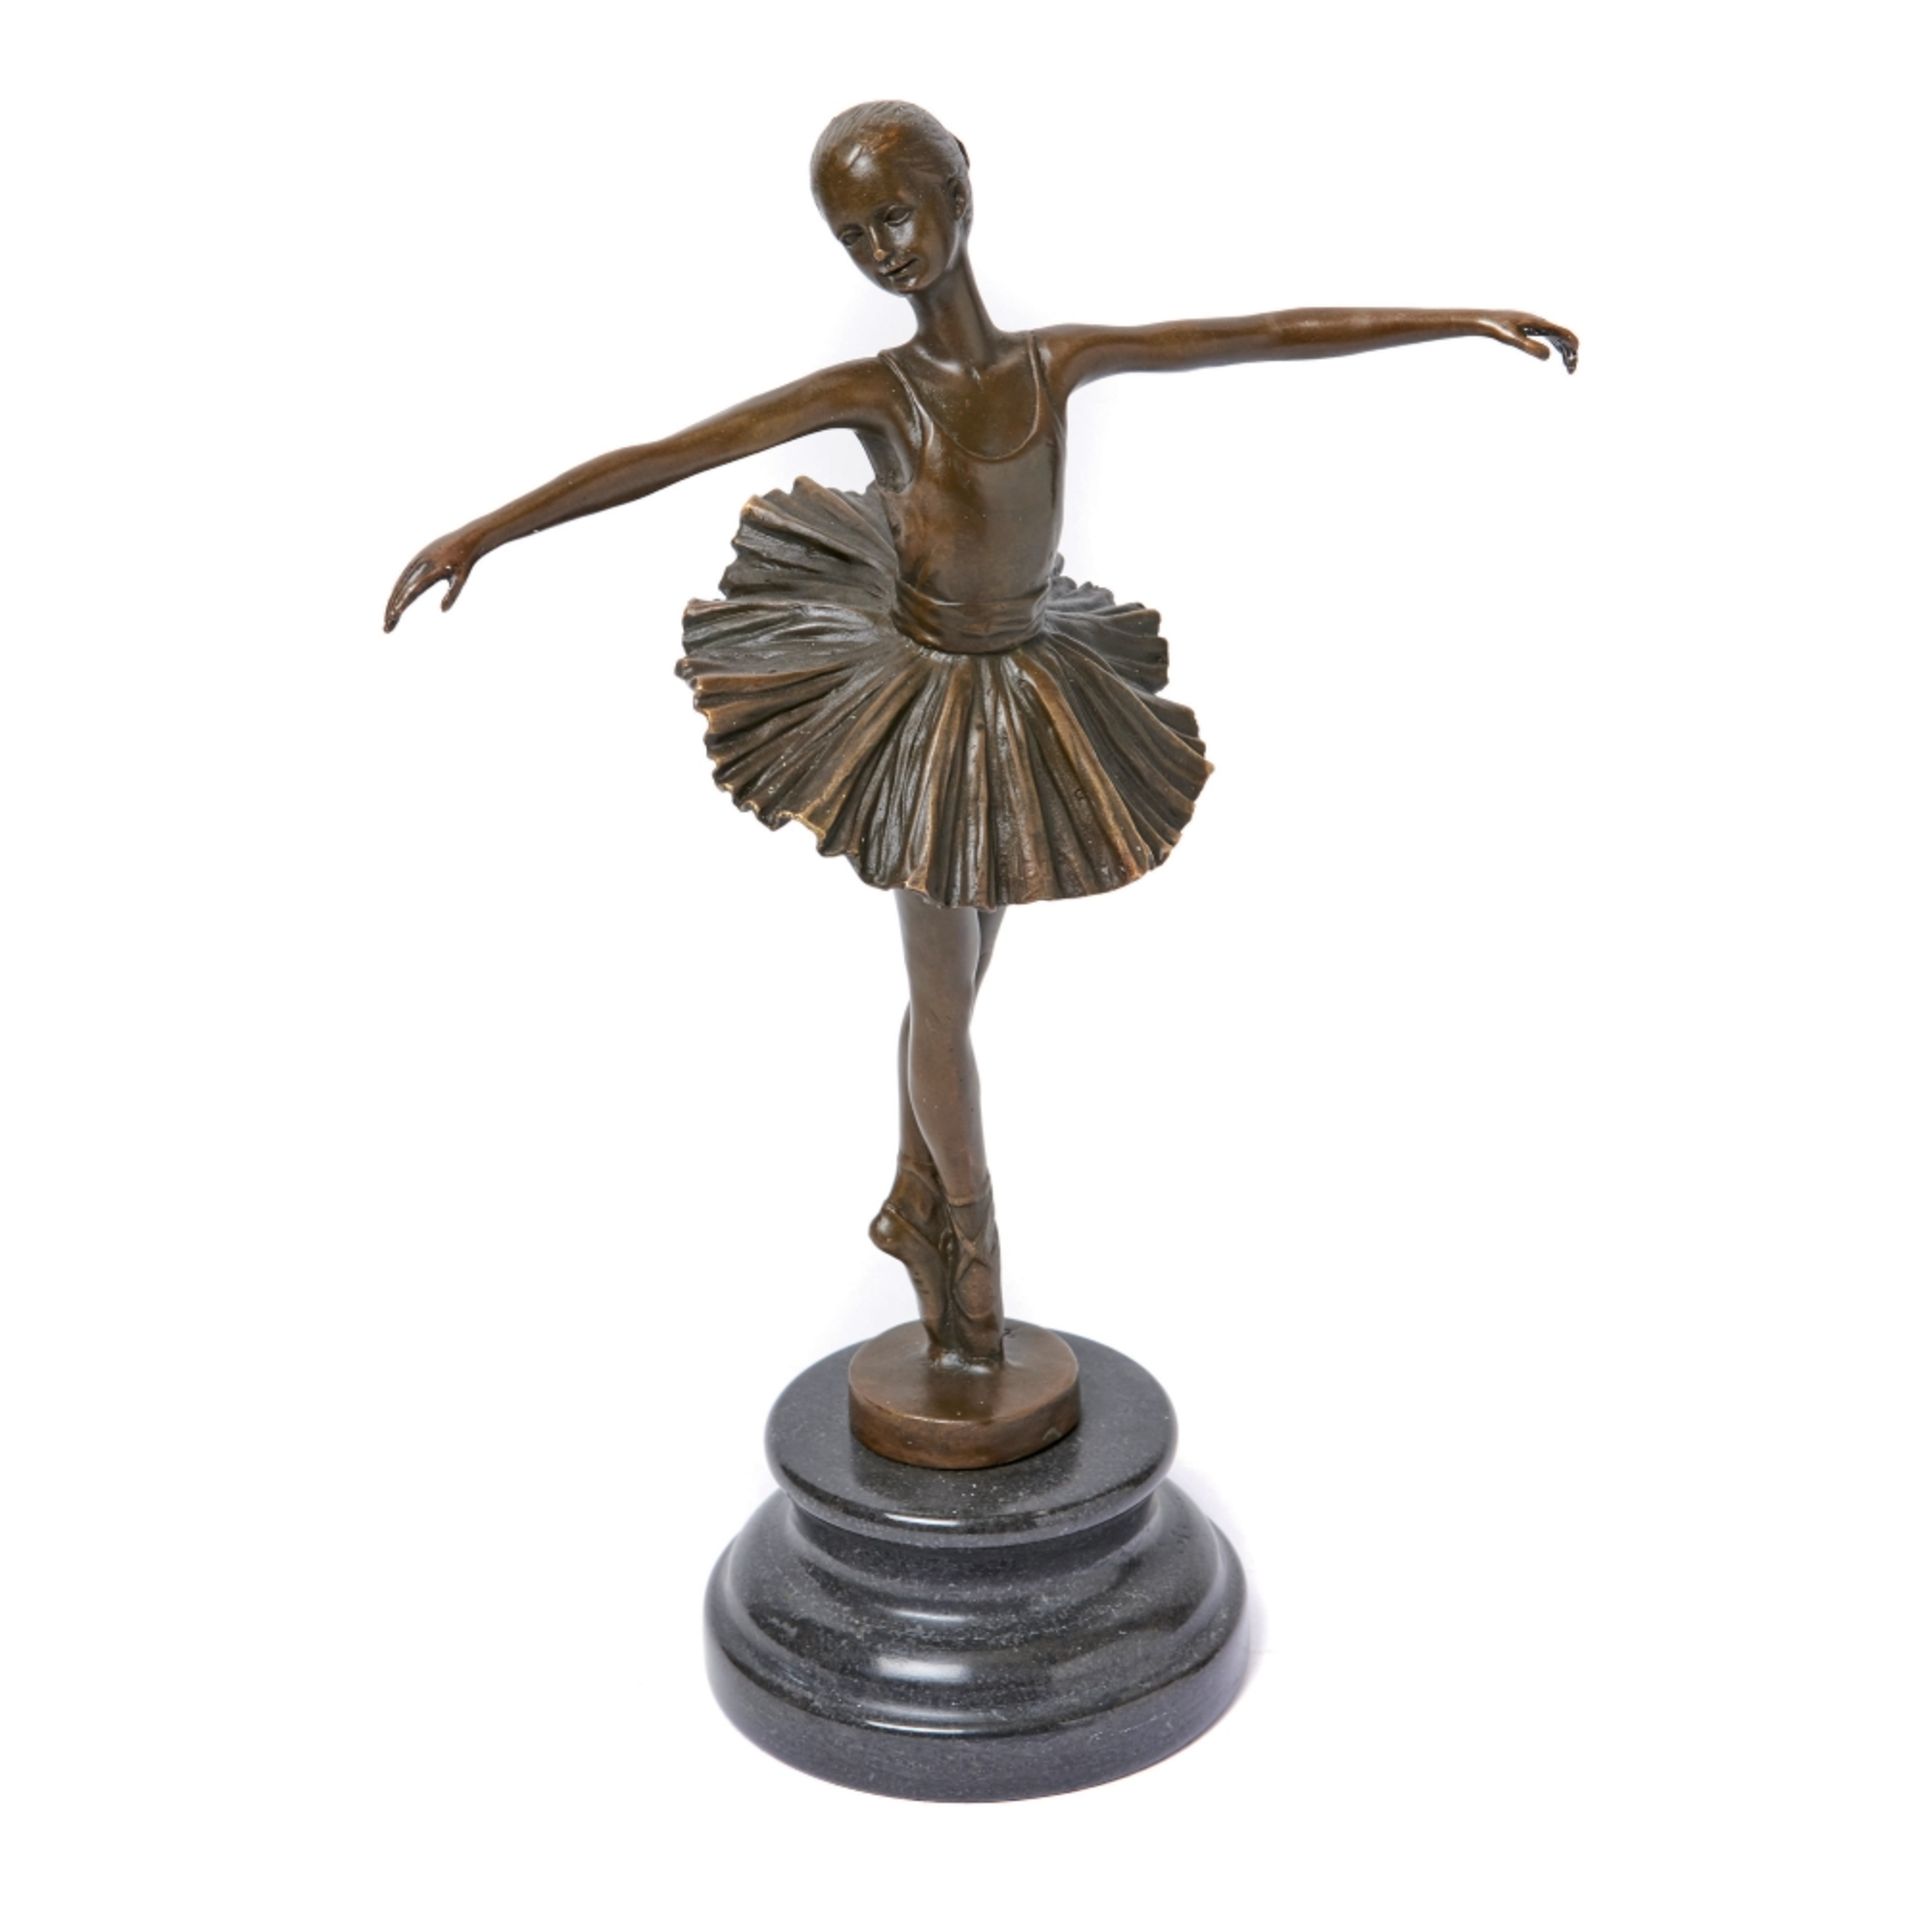 Escuela europea, fles. del s.XX. Bailarina. Escultura en bronce patinado.